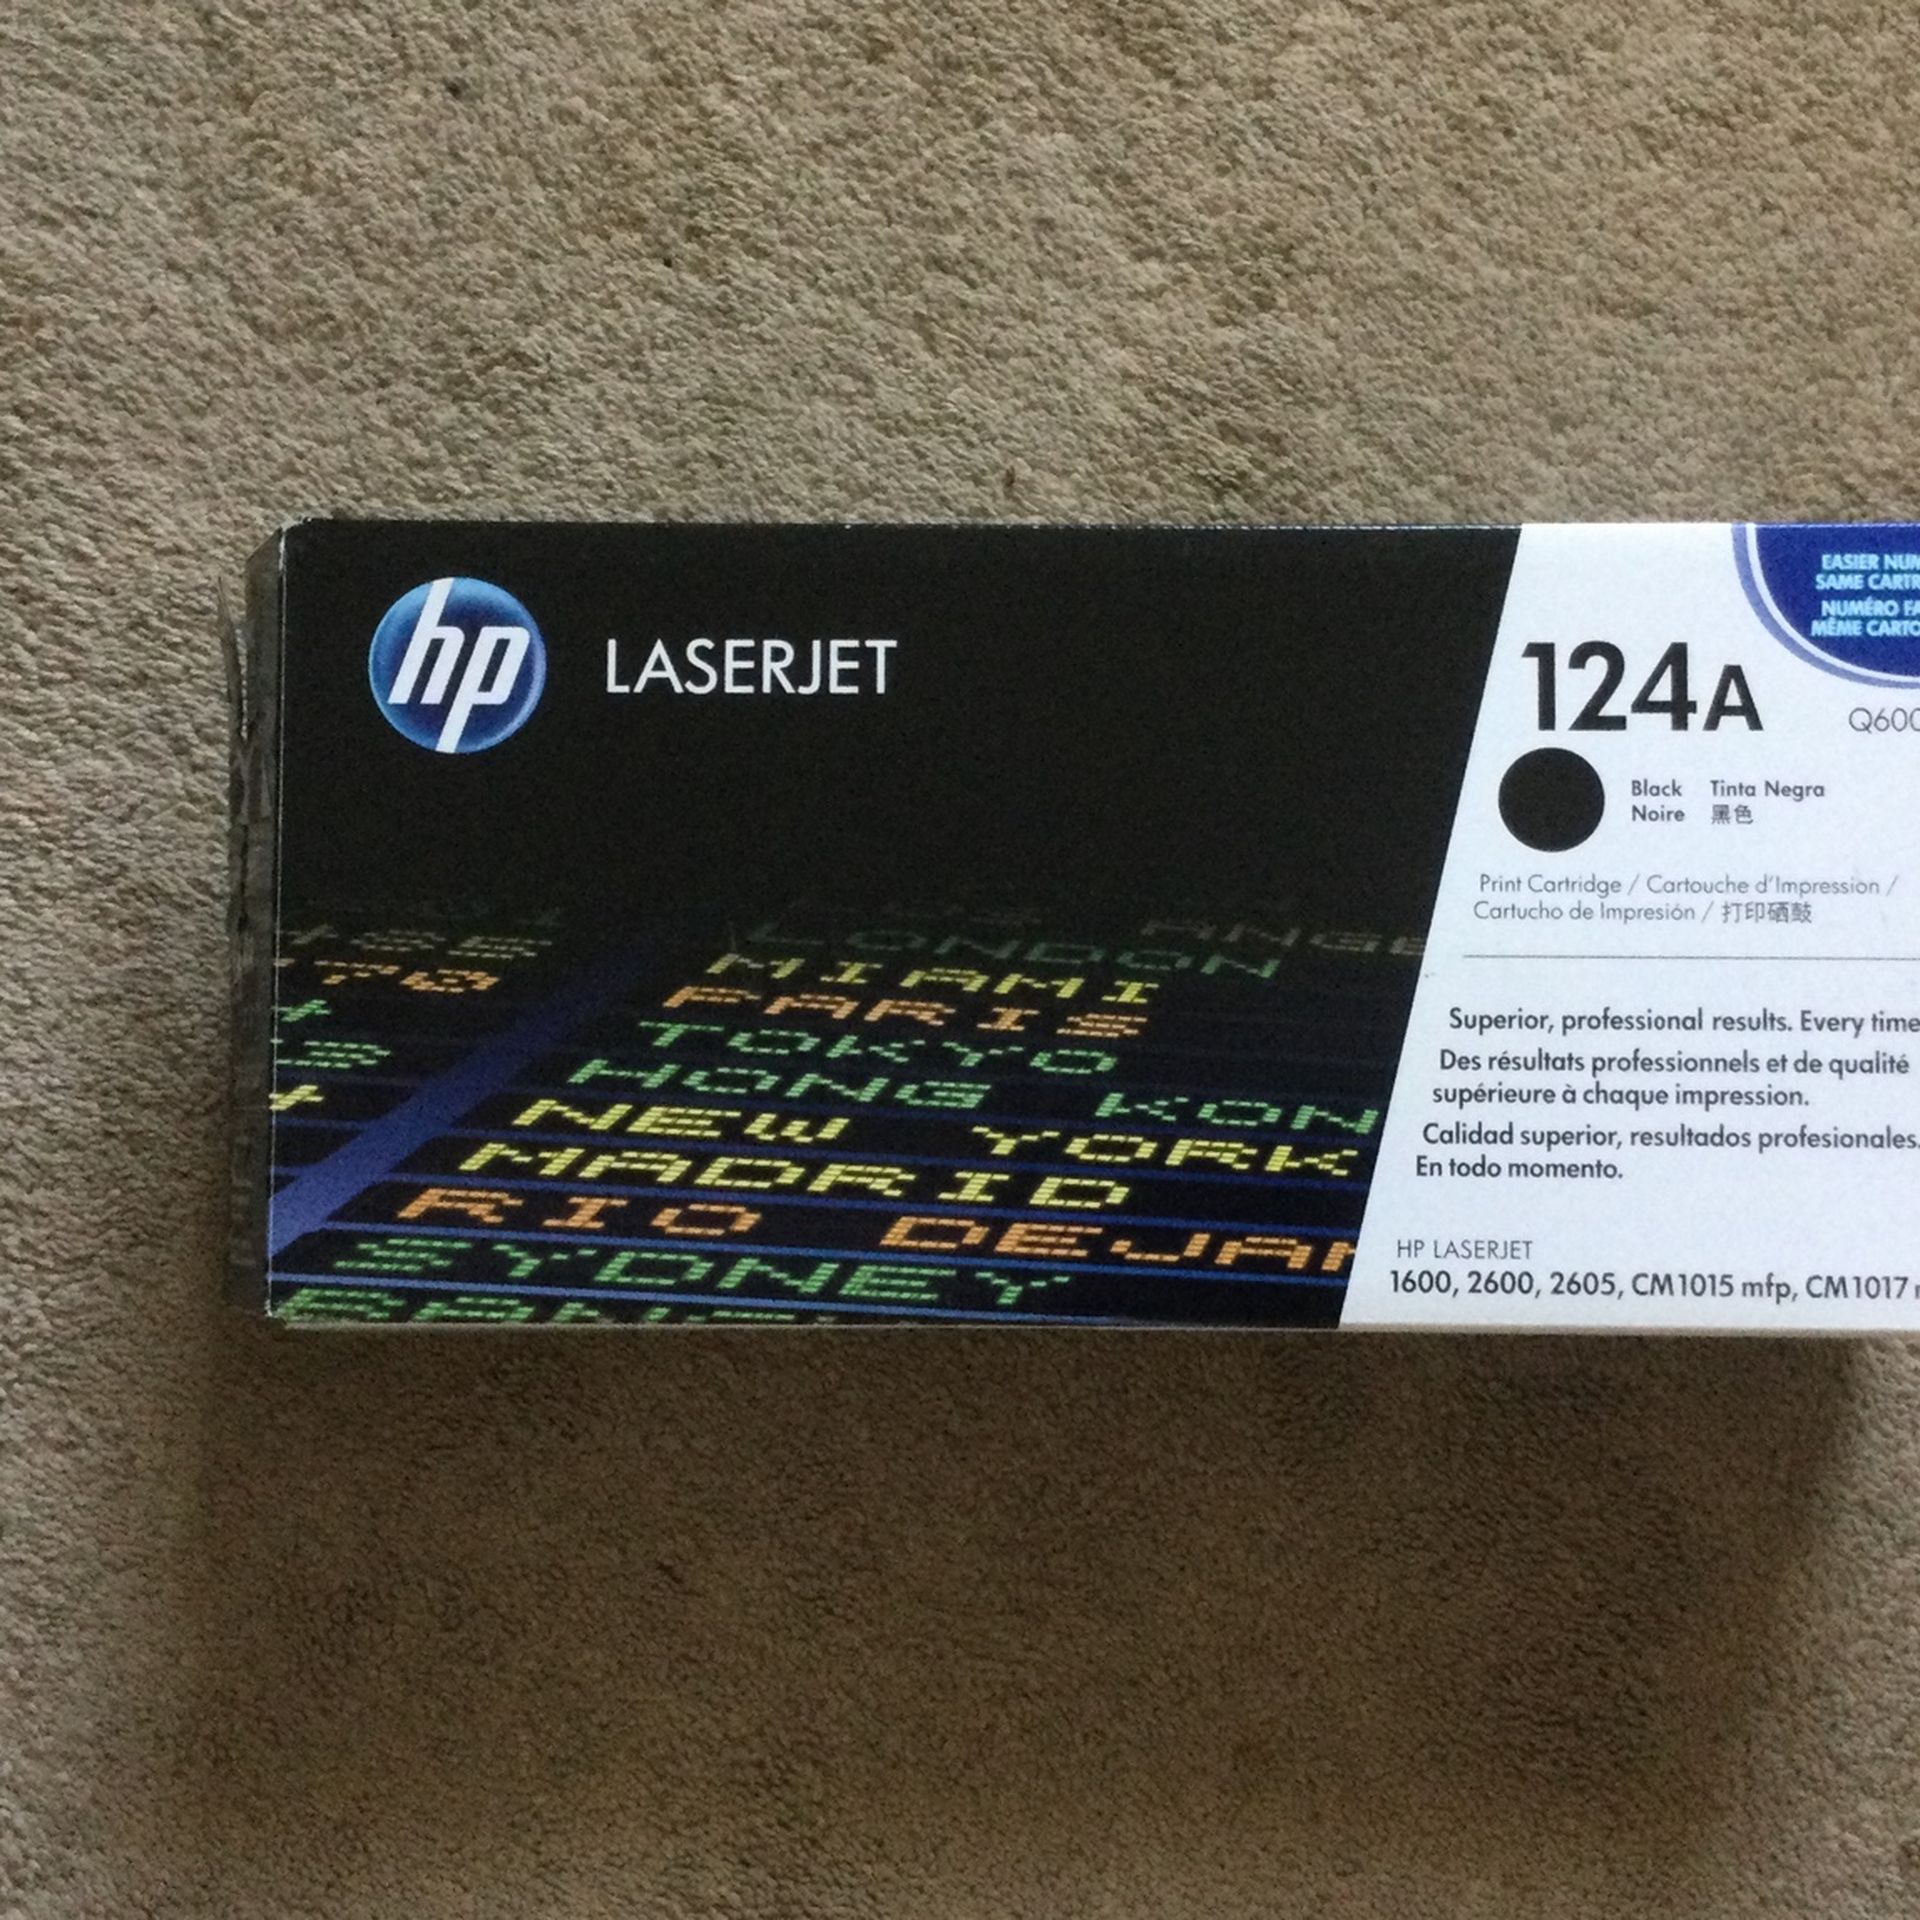 NEW - HP LaserJet 124A Black Cartridge For 1600, 2600, 2605, CM 1015 mfp, CM 1017 mfp LaserJet printers